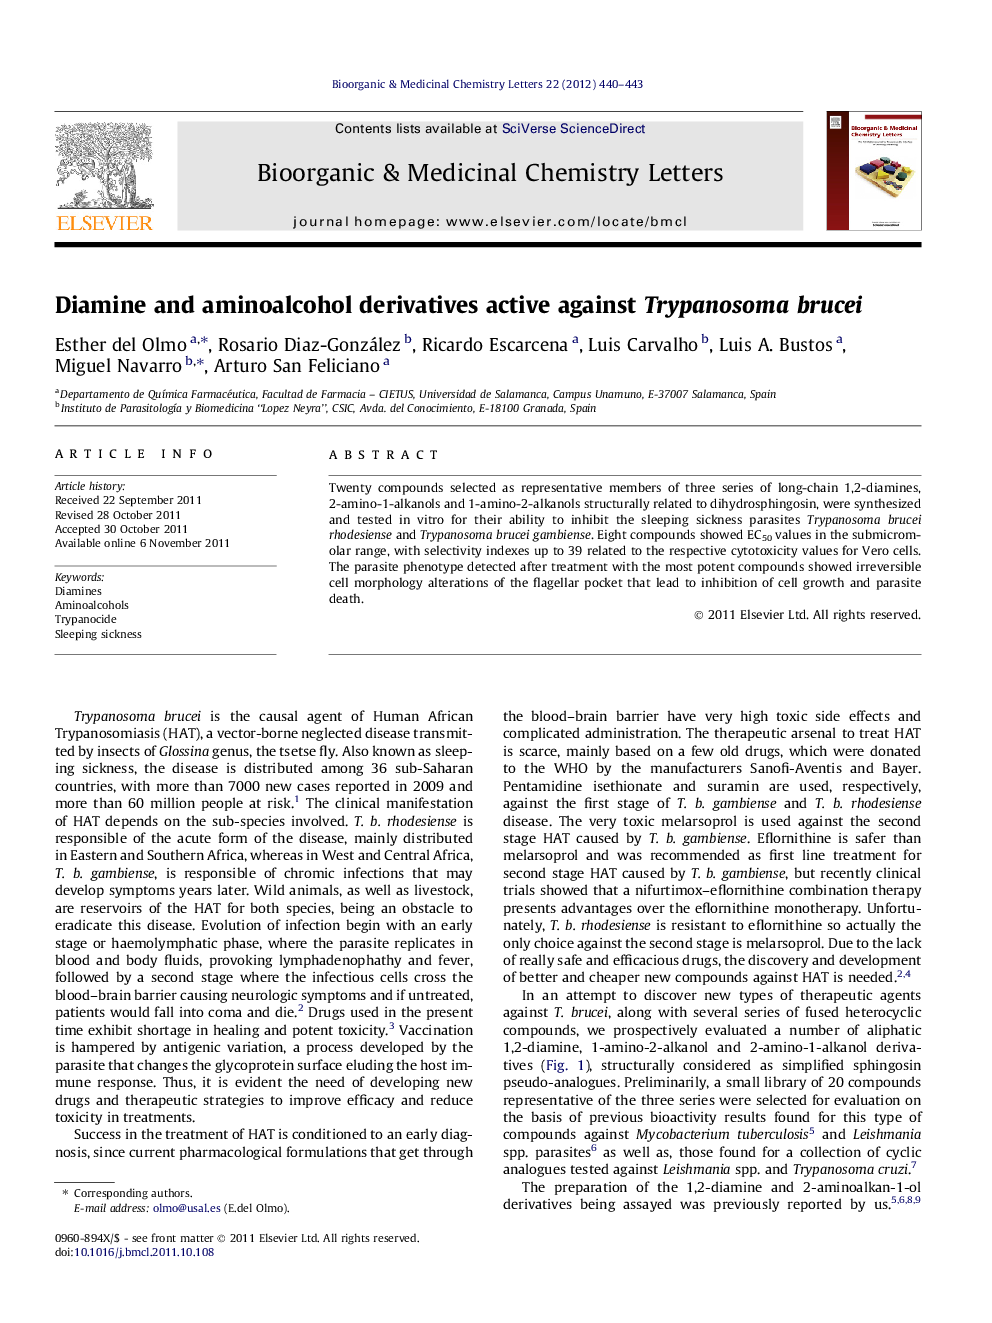 Diamine and aminoalcohol derivatives active against Trypanosoma brucei